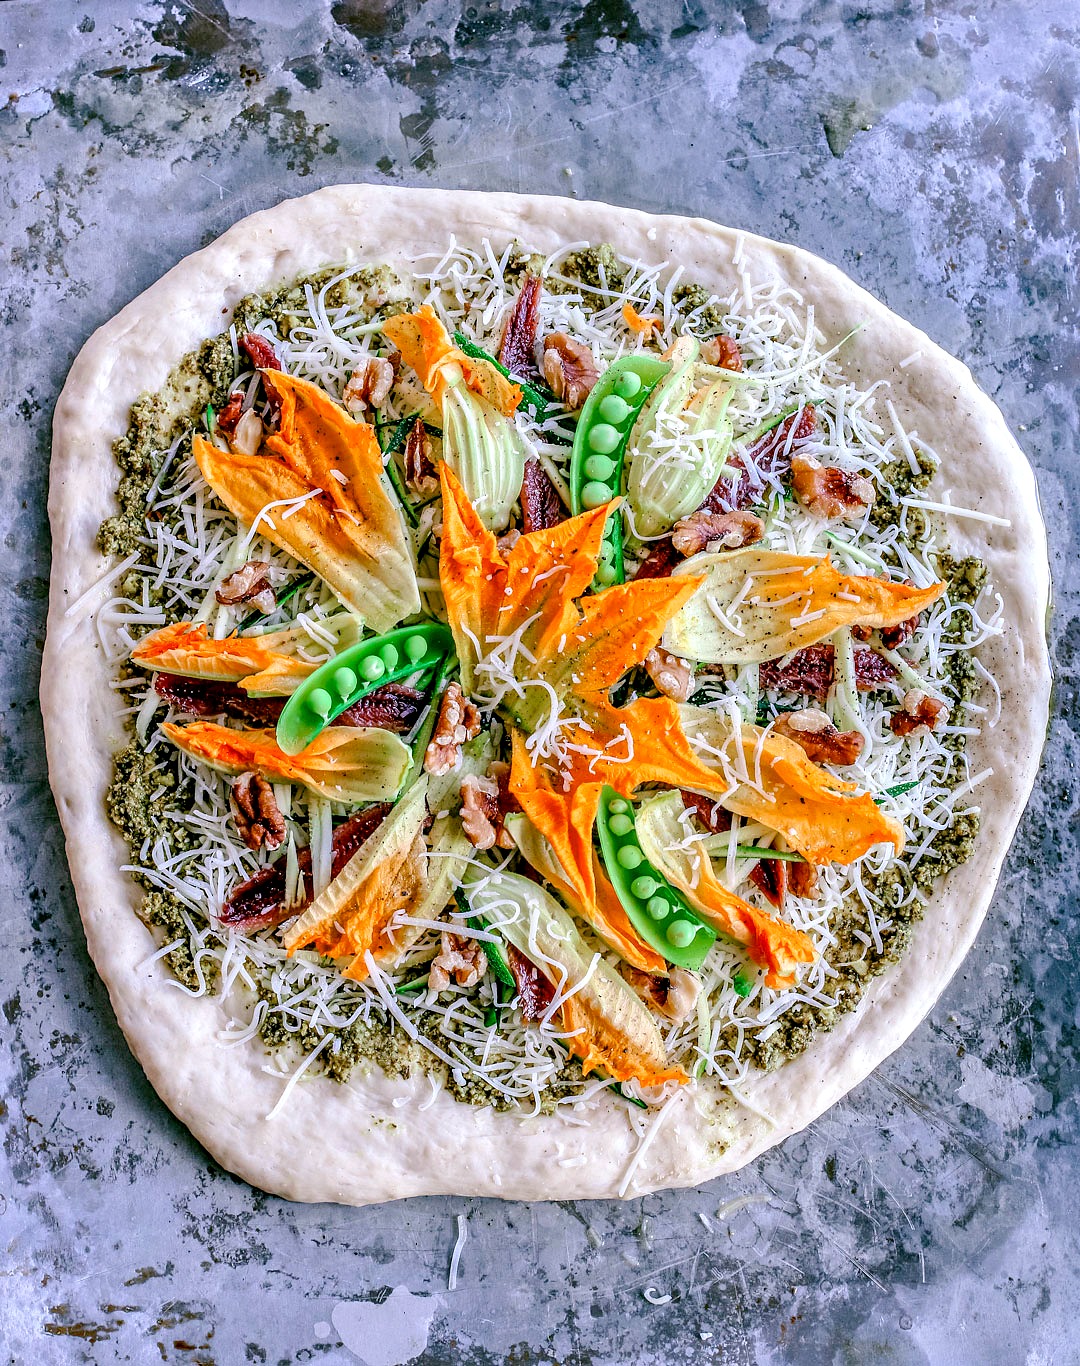 Summer Zucchini and Pesto Pizza With Squash Blossoms | Killing Thyme